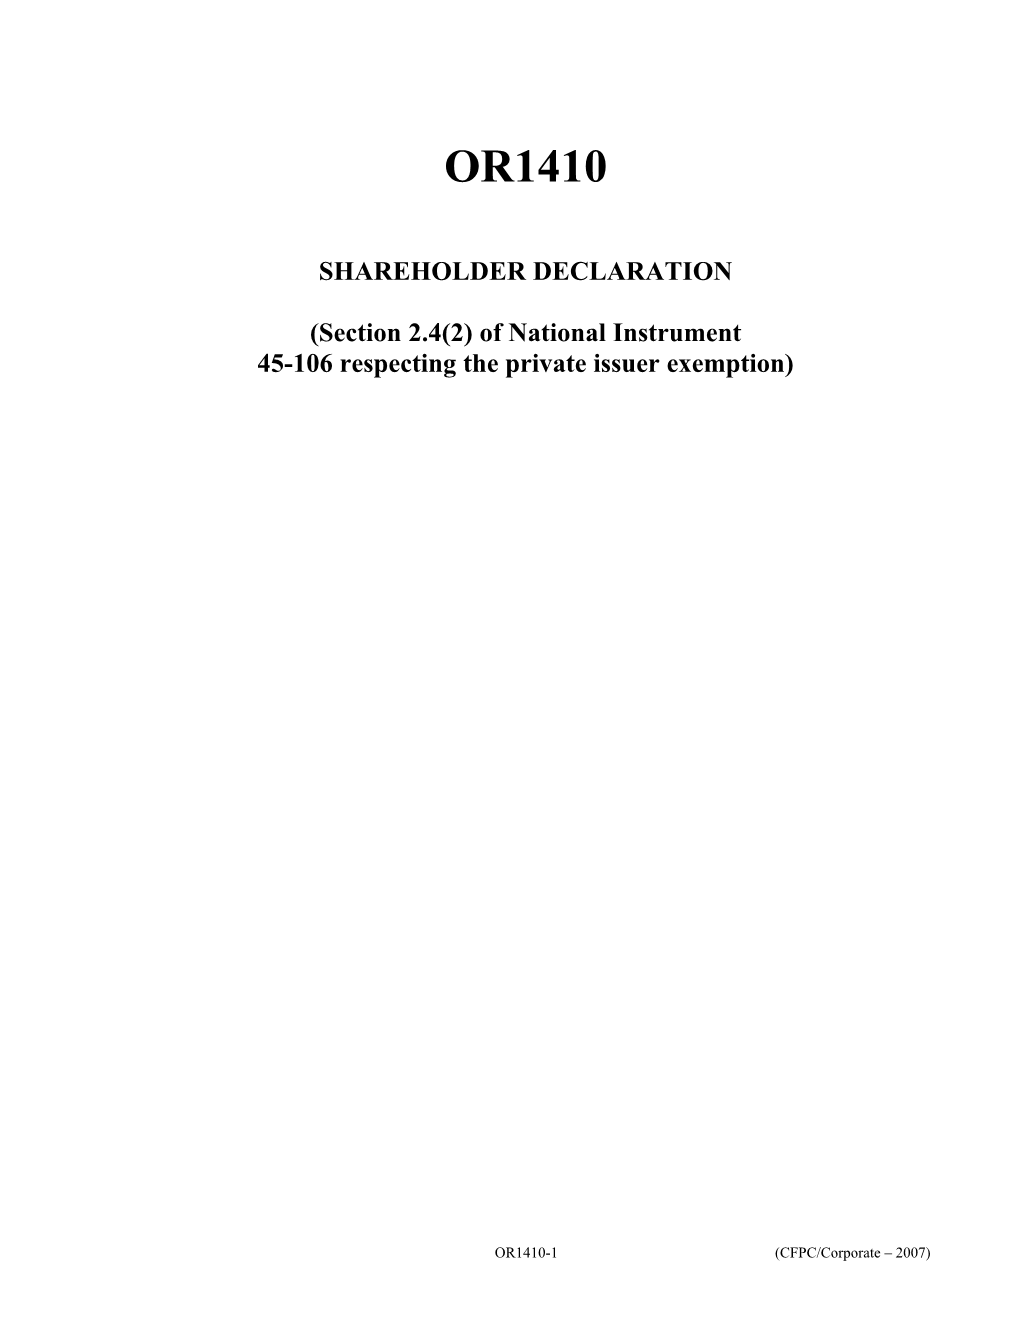 Or1410- Shareholder Declaration (Section 2.4(2) of National Instrument 45-106 Respecting